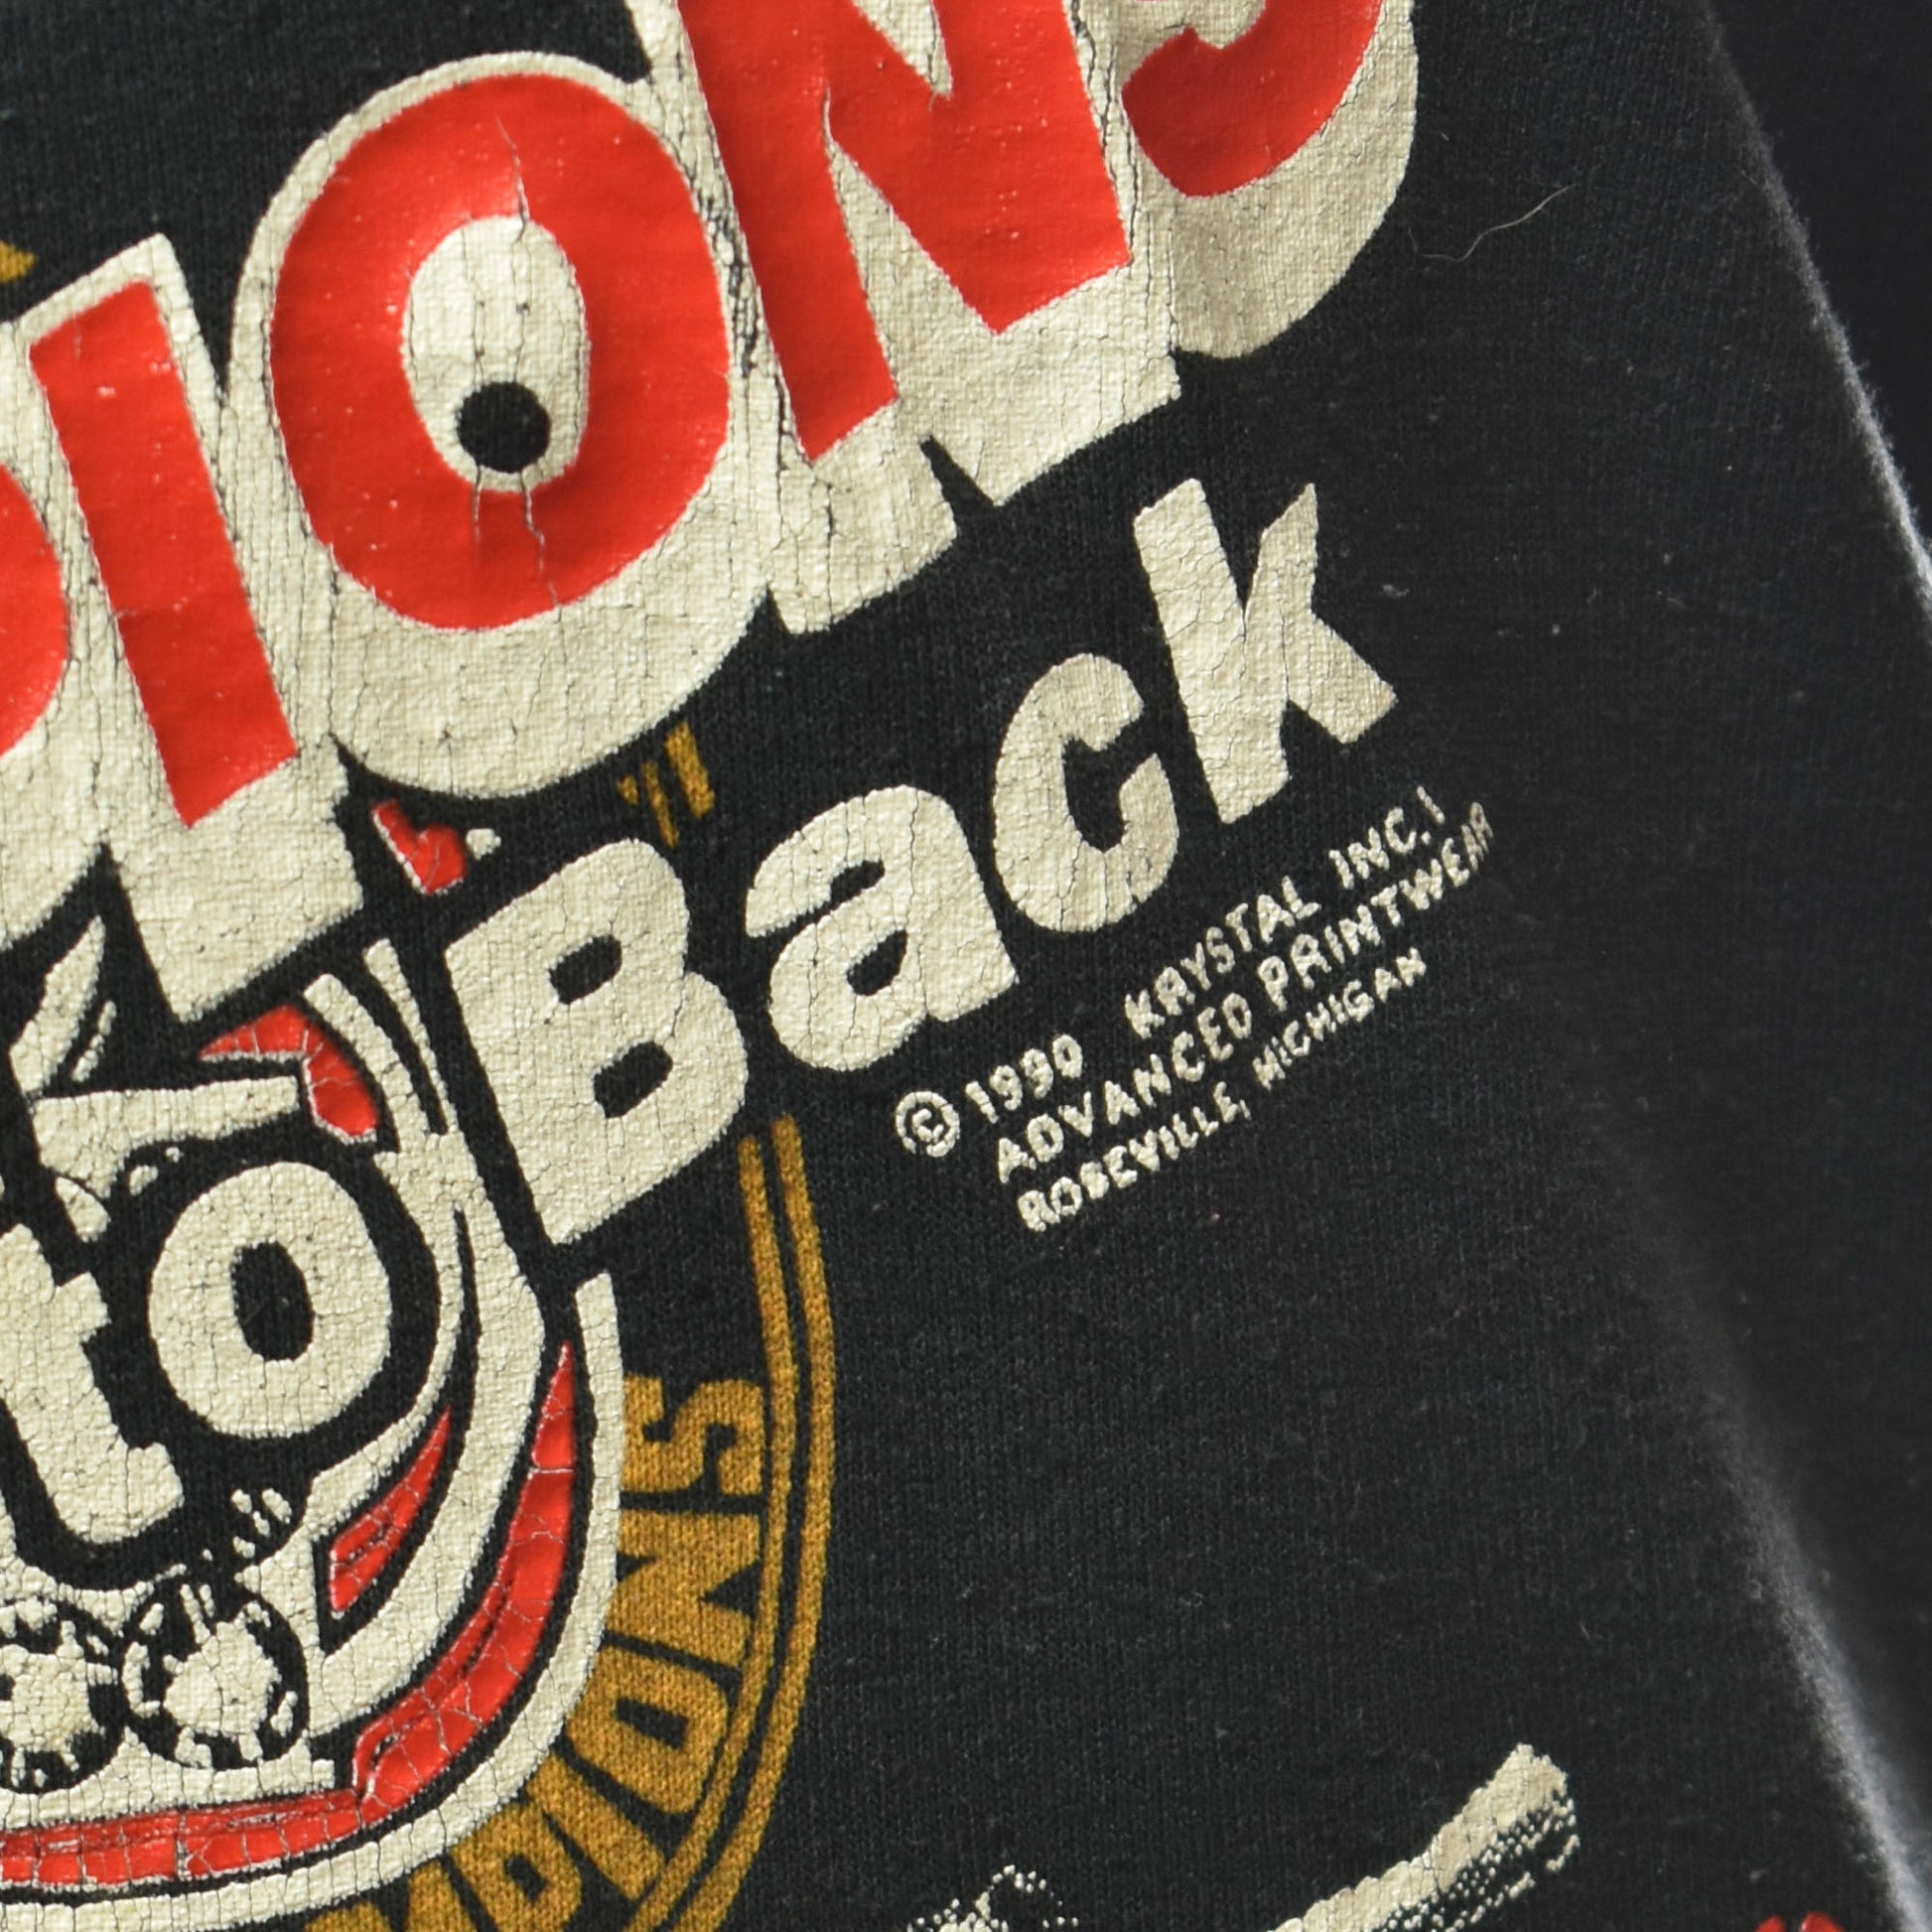 Vintage Detroit Pistons Bad Boys Hammer Time T-Shirt